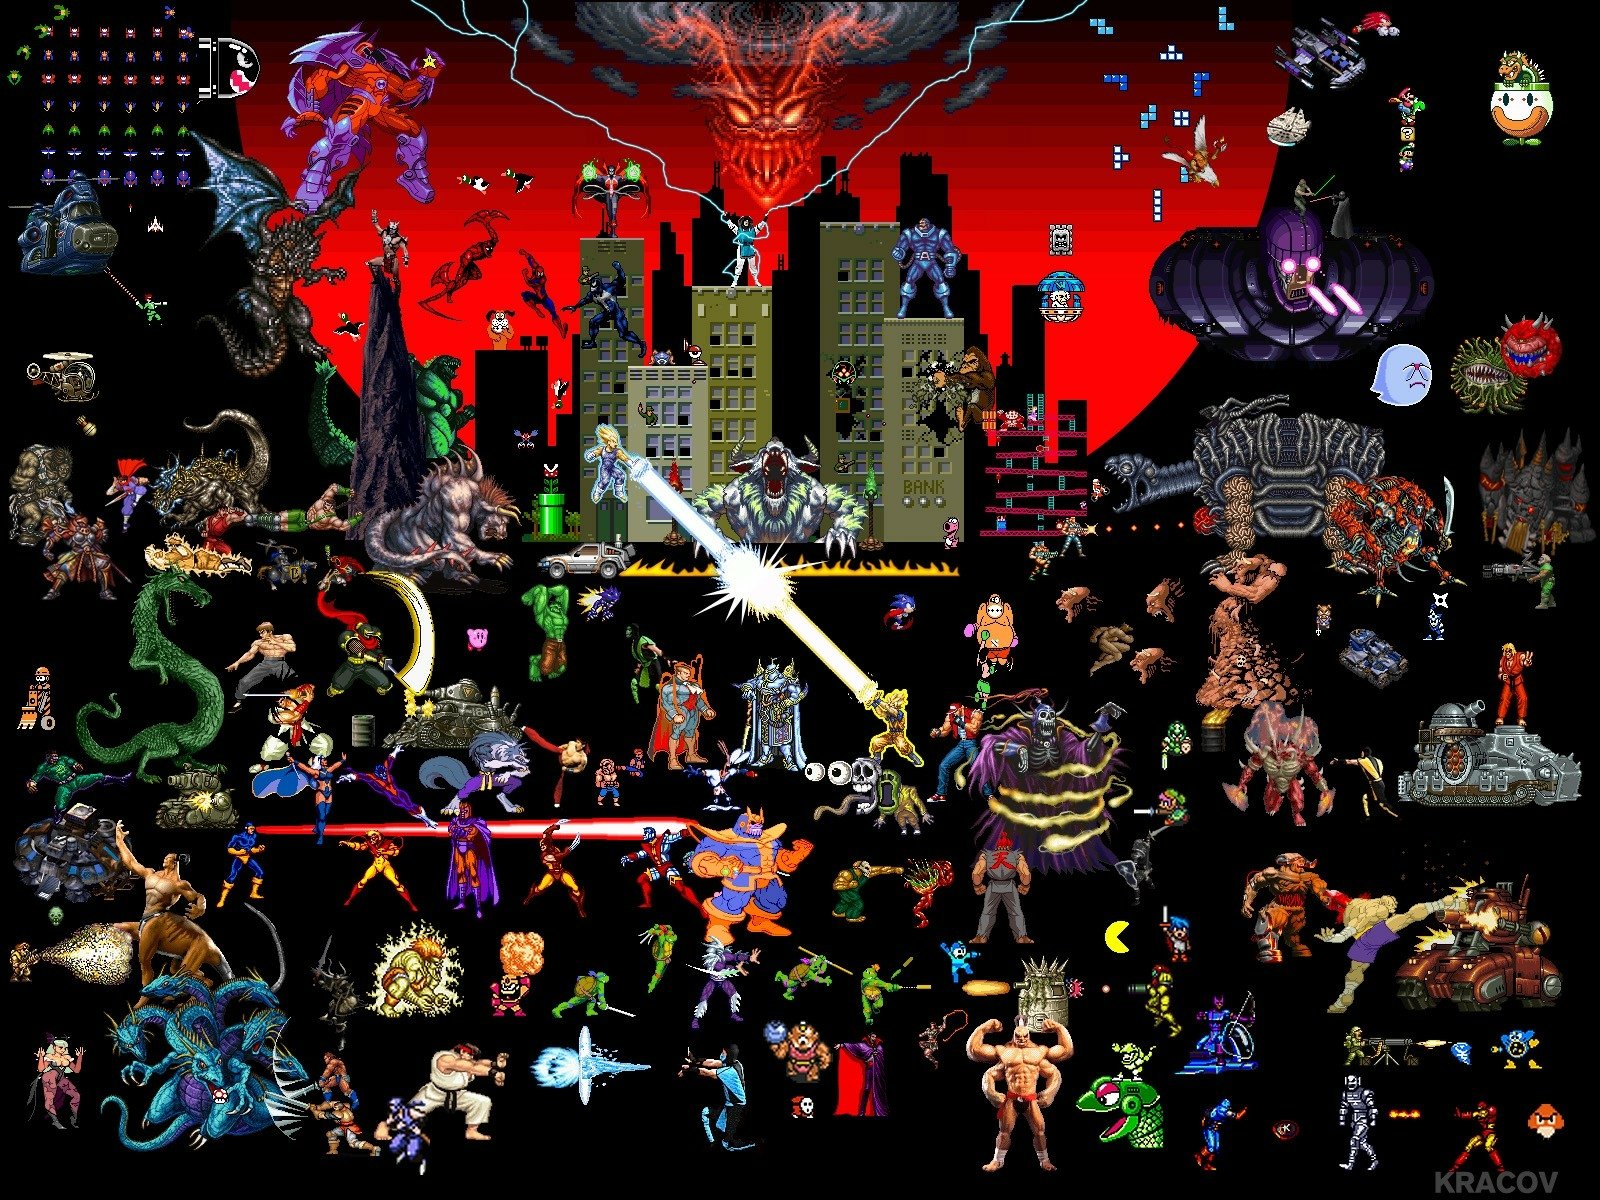 game collage website wallpaper